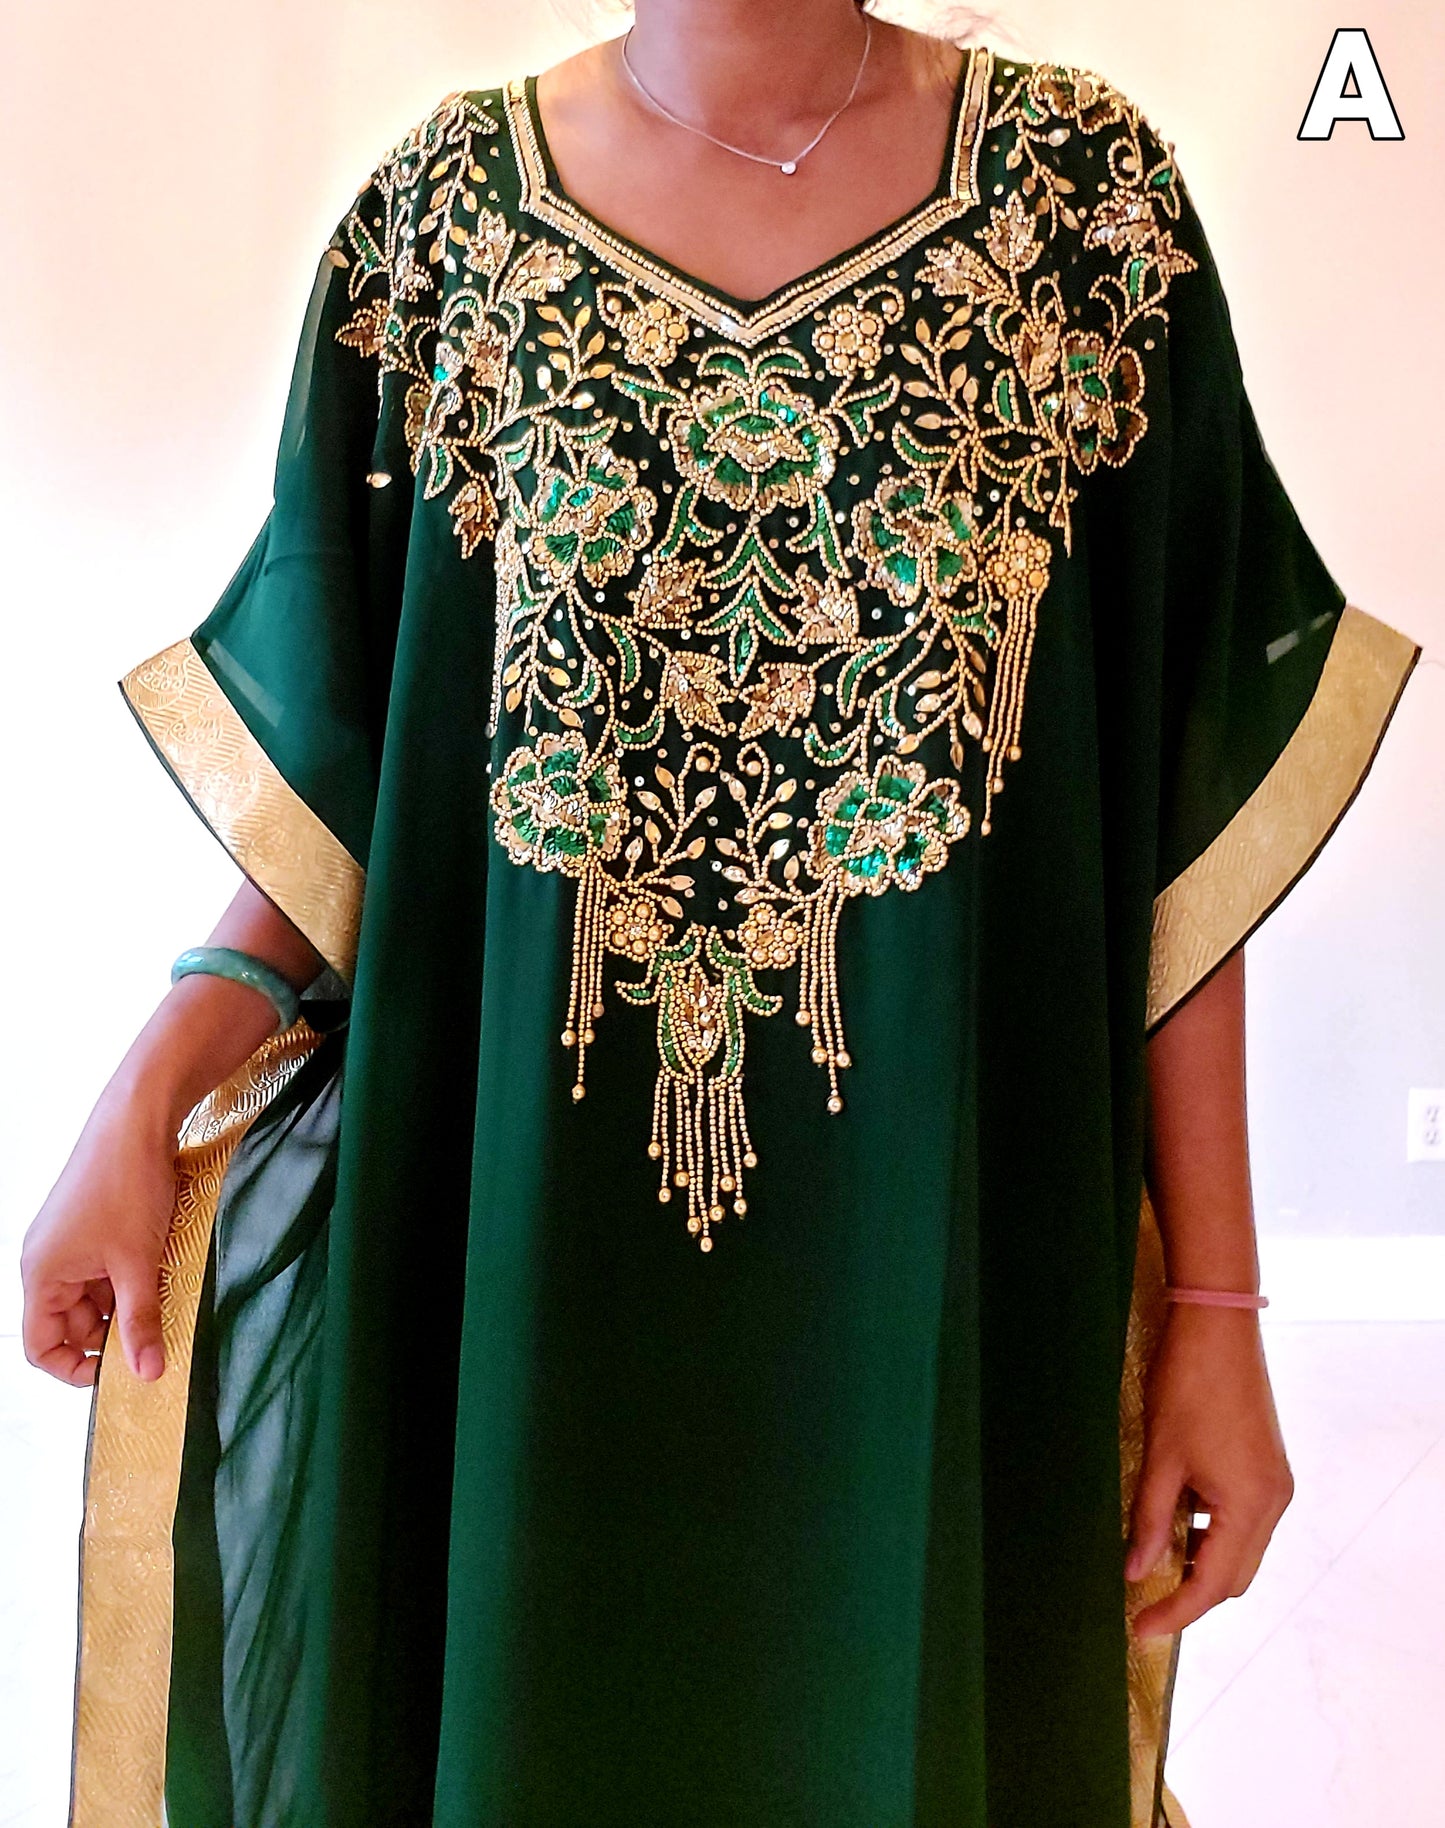 Beaded kaftan Dress With Gold Border - A